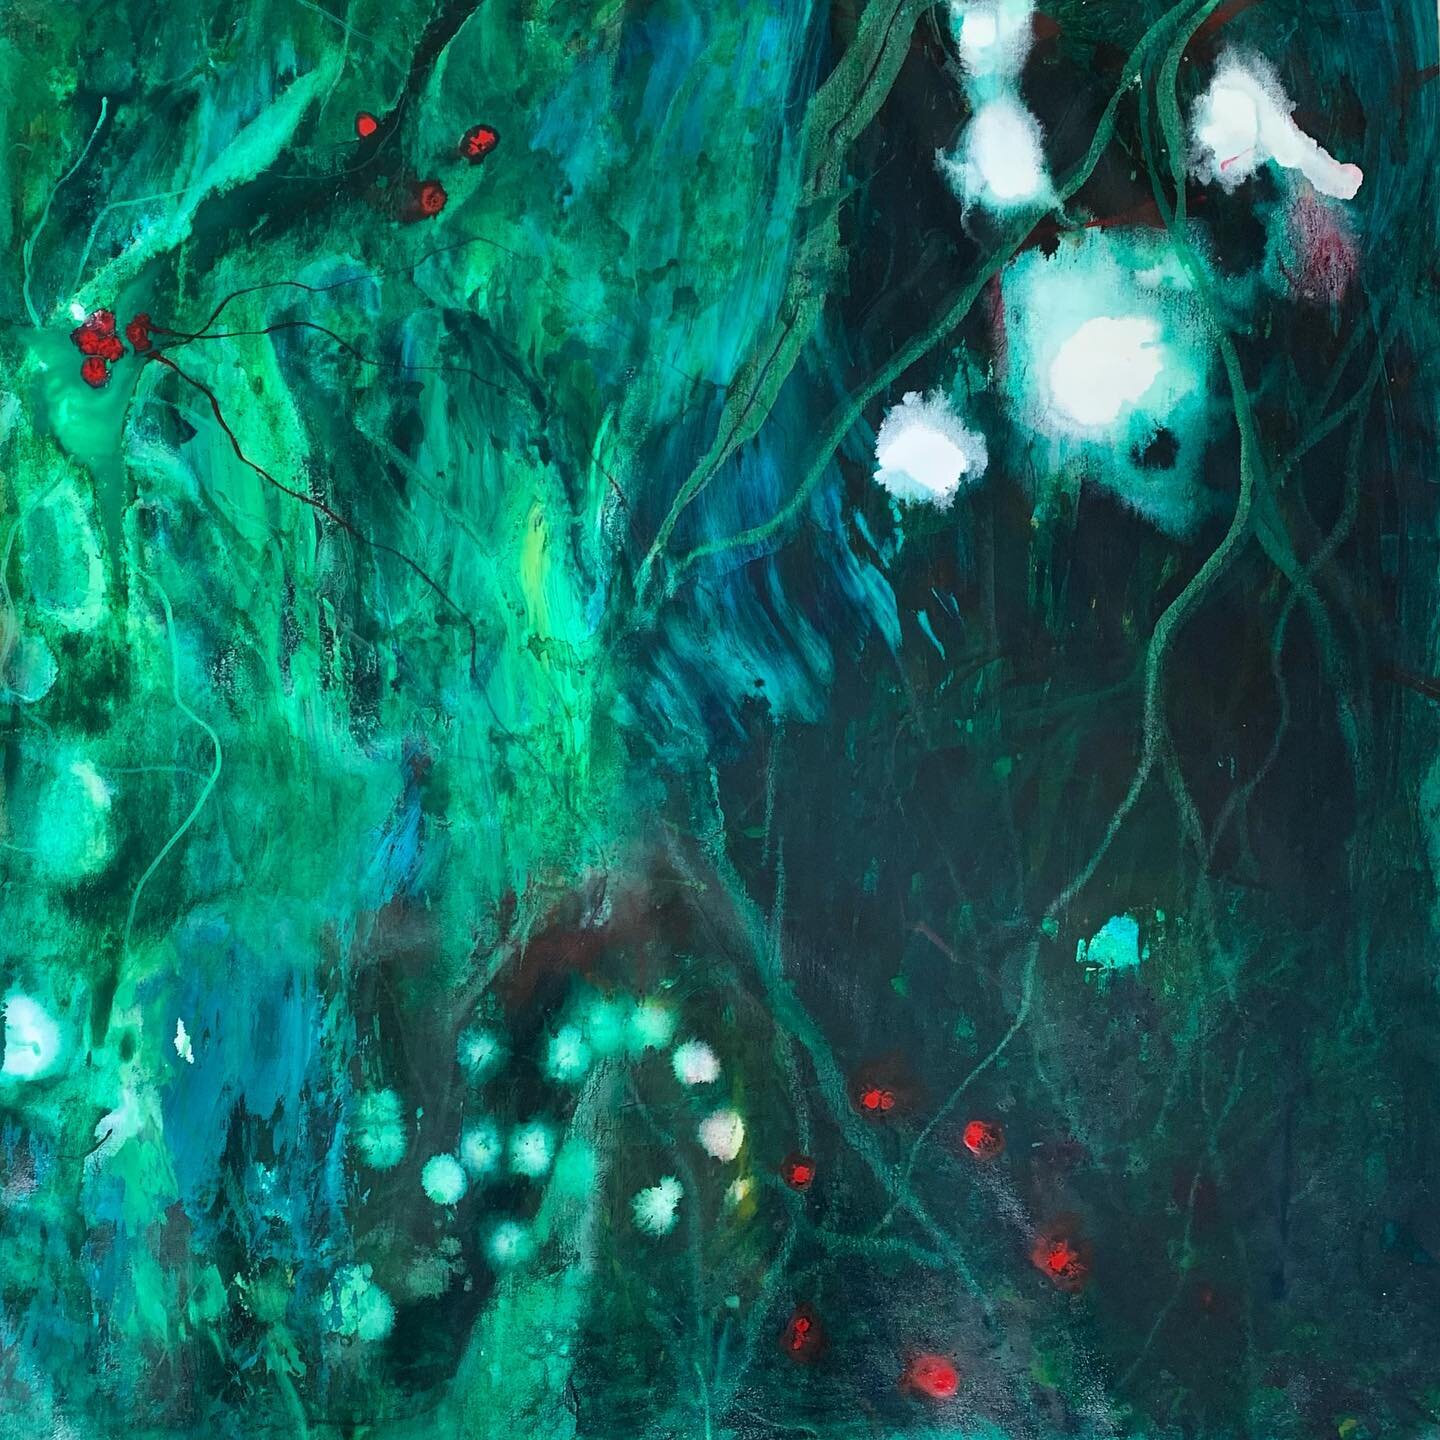 Forest Healing
36 x 36 ins
Acrylic on canvas

#abstractexpressionism #abstractart #healingart #greenvibrations #forestbathing #natureandart #artcollectors #abstractartorg #fyj #art2lifeacademy #contemporarypainting #deepforest #womanartist